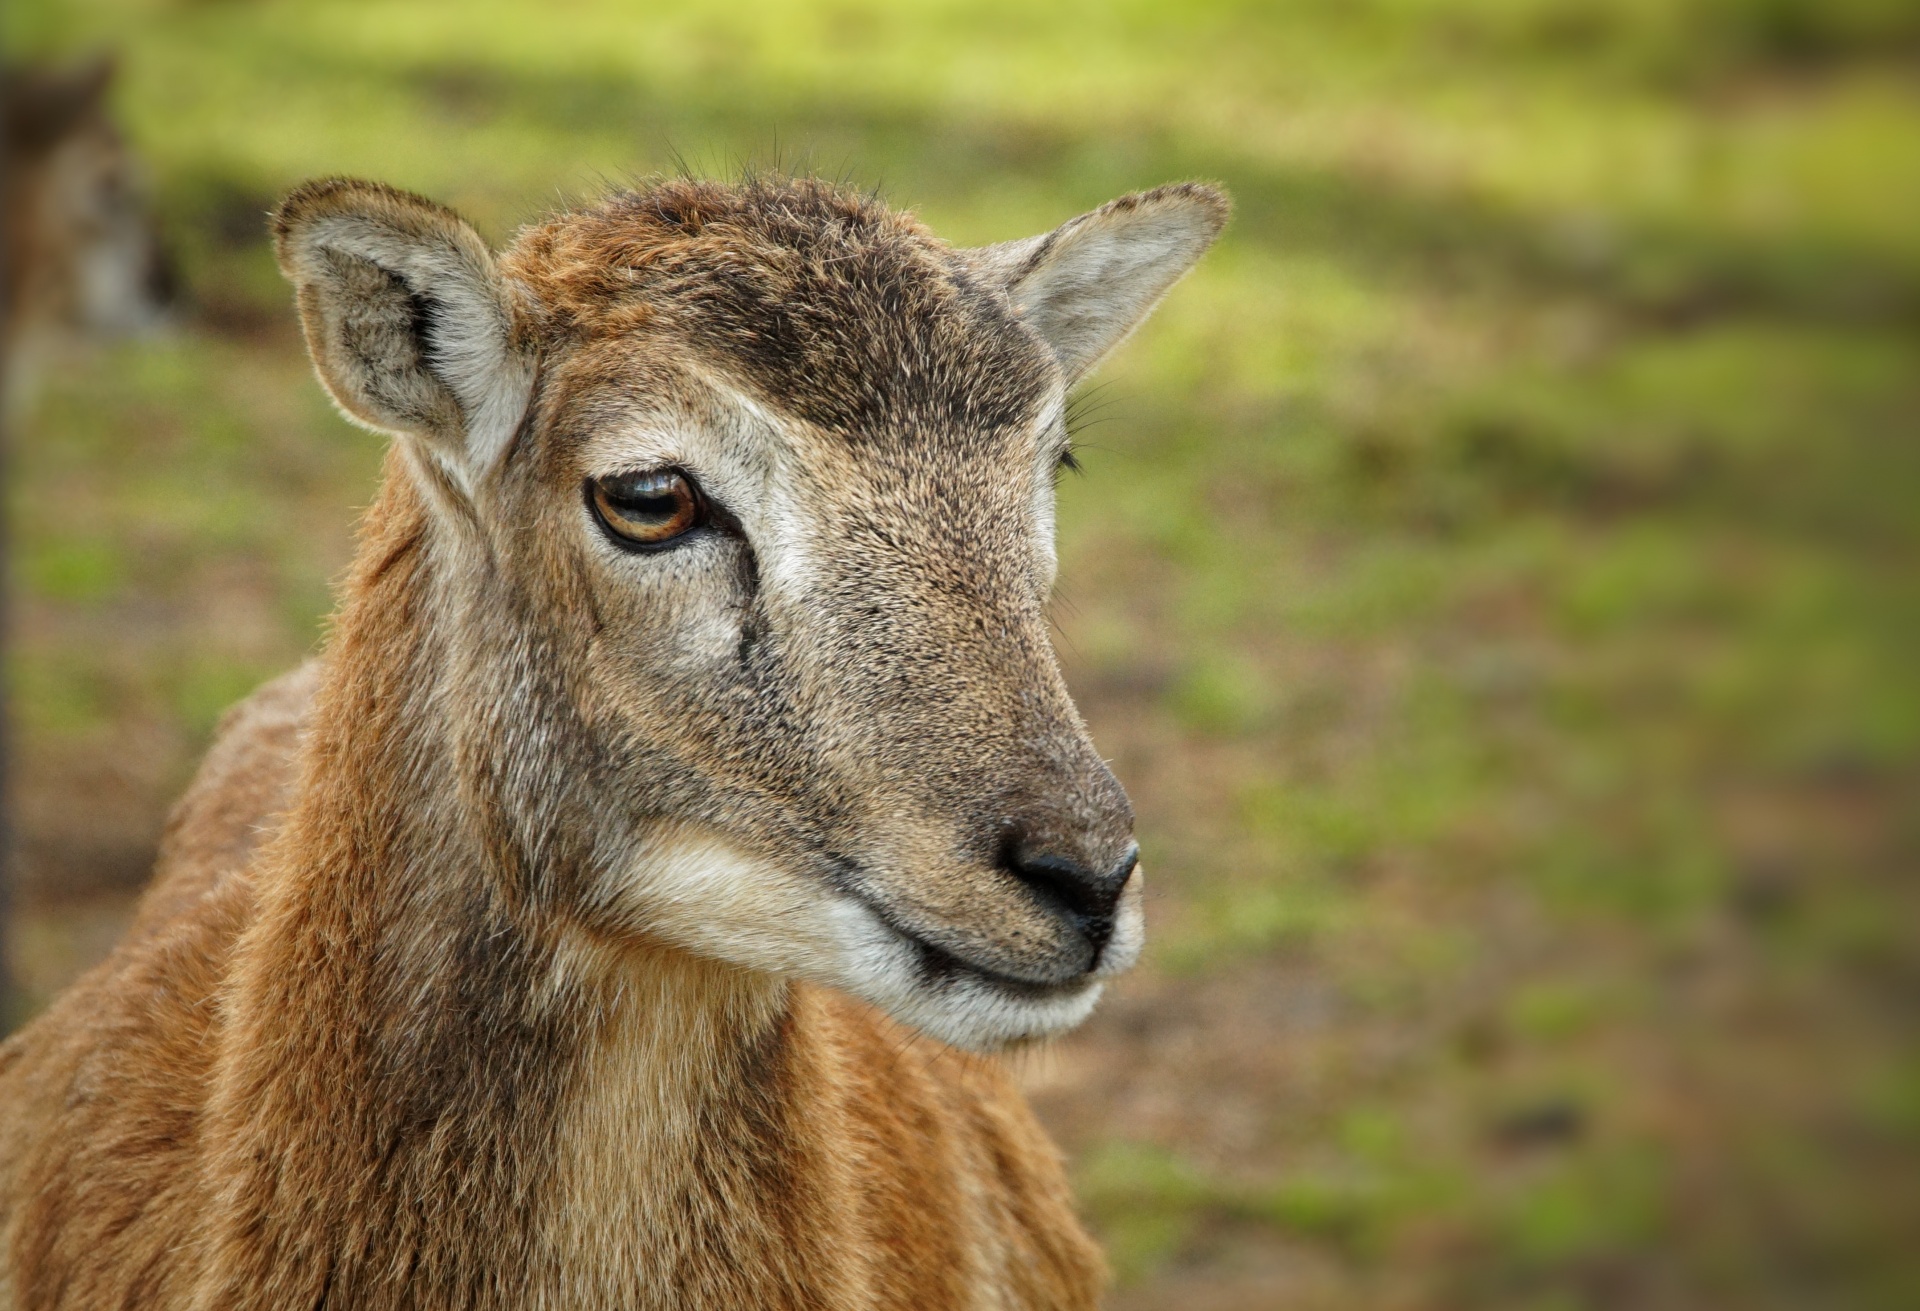 Mouflon wilde schapen dierlijke steenbok